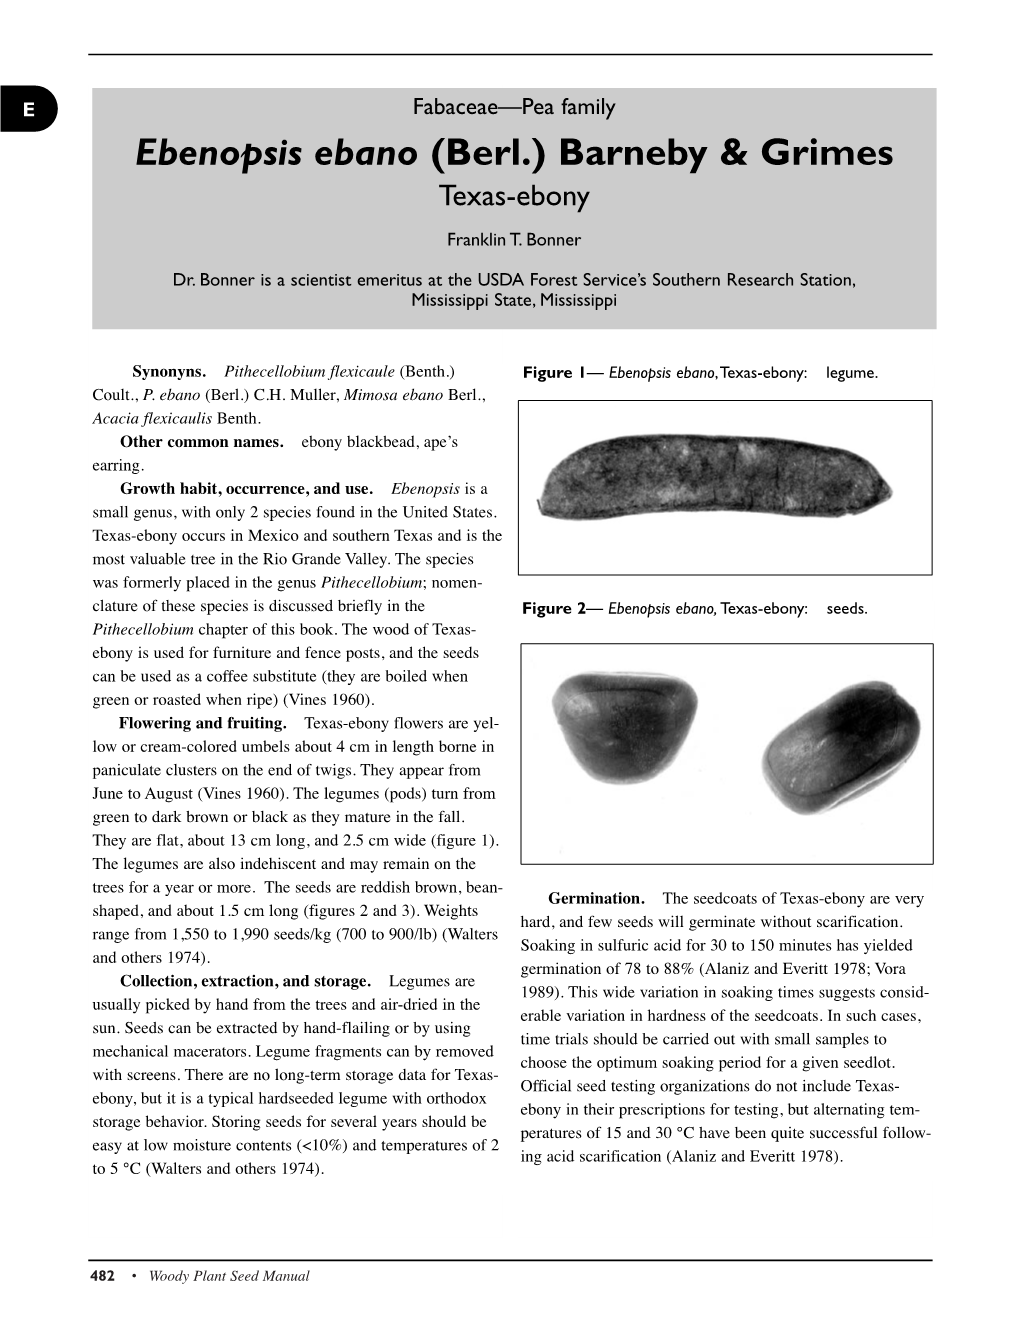 Ebenopsis Ebano (Berl.) Barneby & Grimes Texas-Ebony